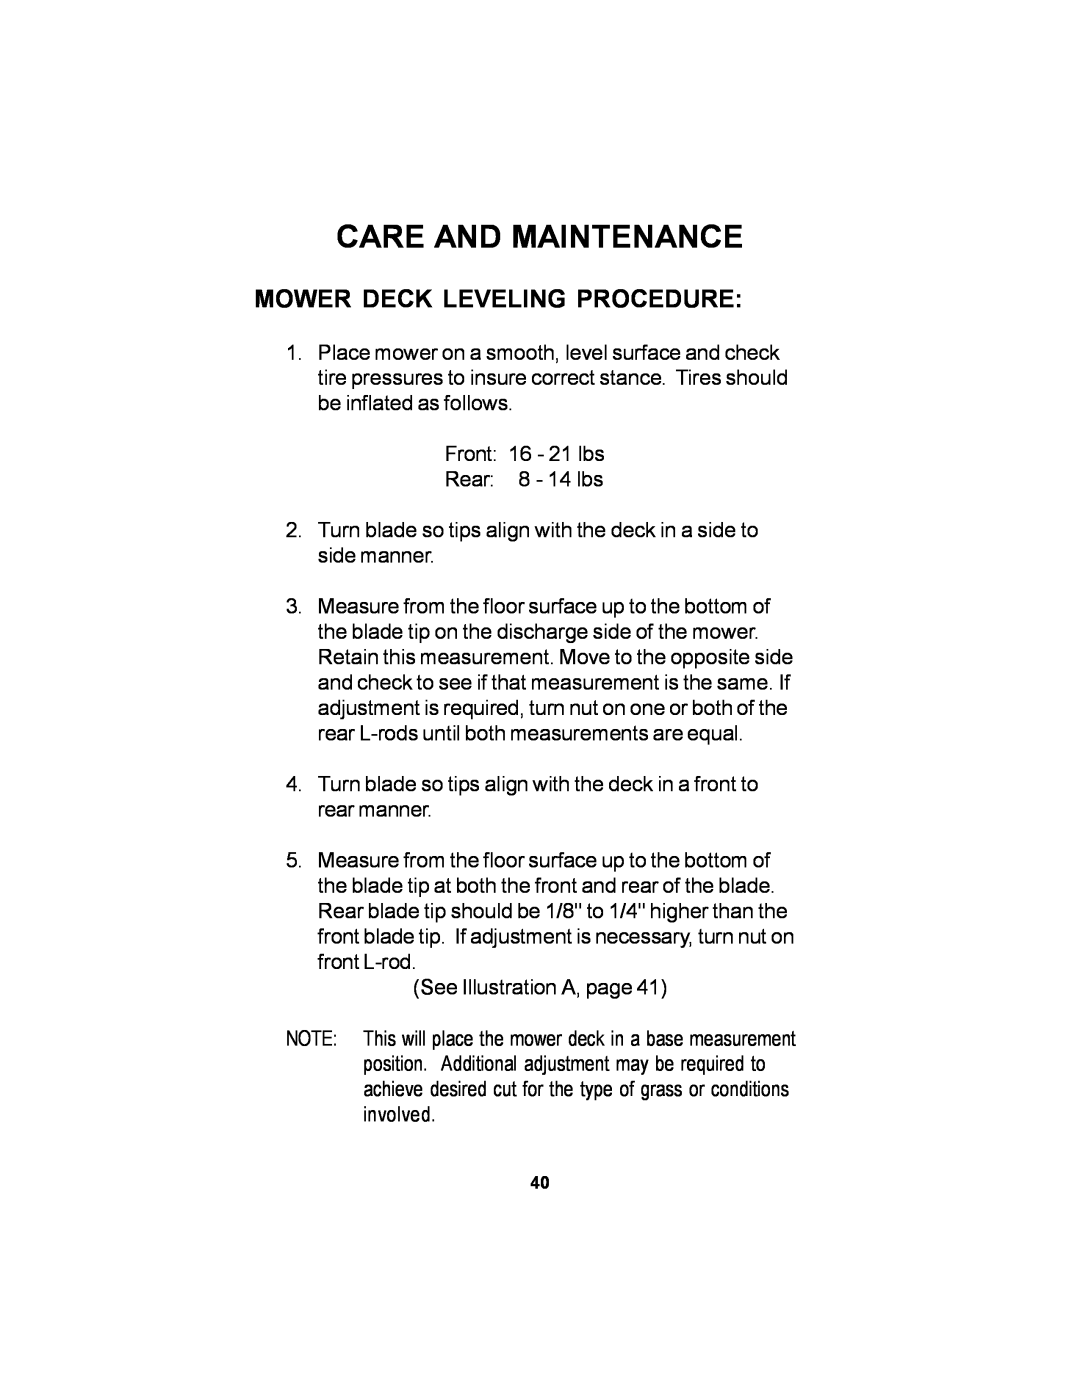 Dixon 14295-1005 manual Mower Deck Leveling Procedure, Care And Maintenance 